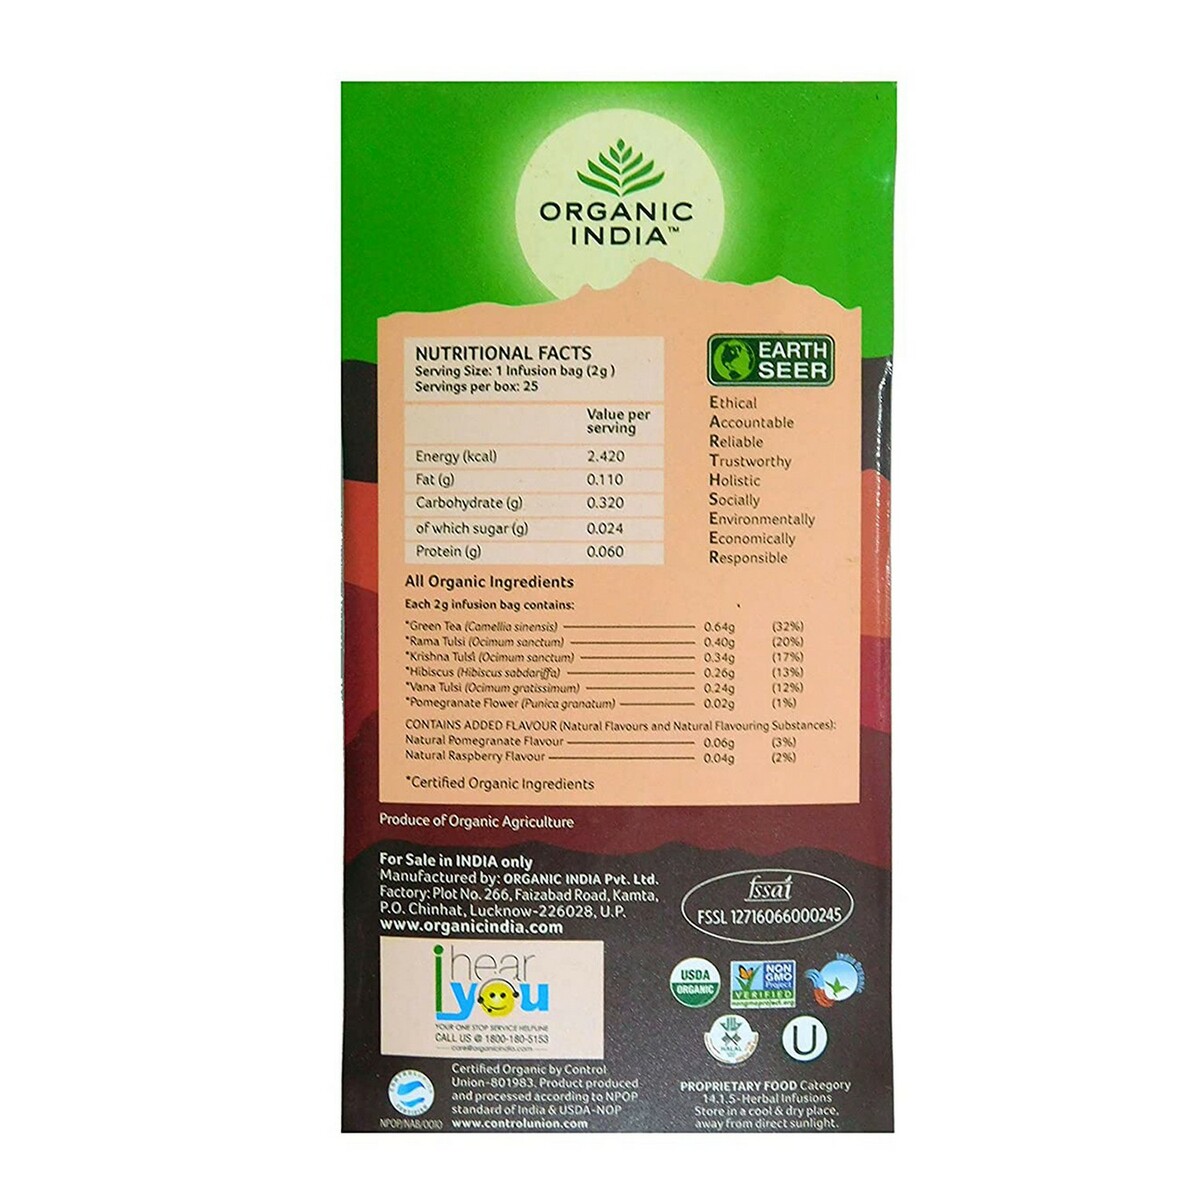 Organic India Tulsi Green Pomegranate Tea Bag 18's